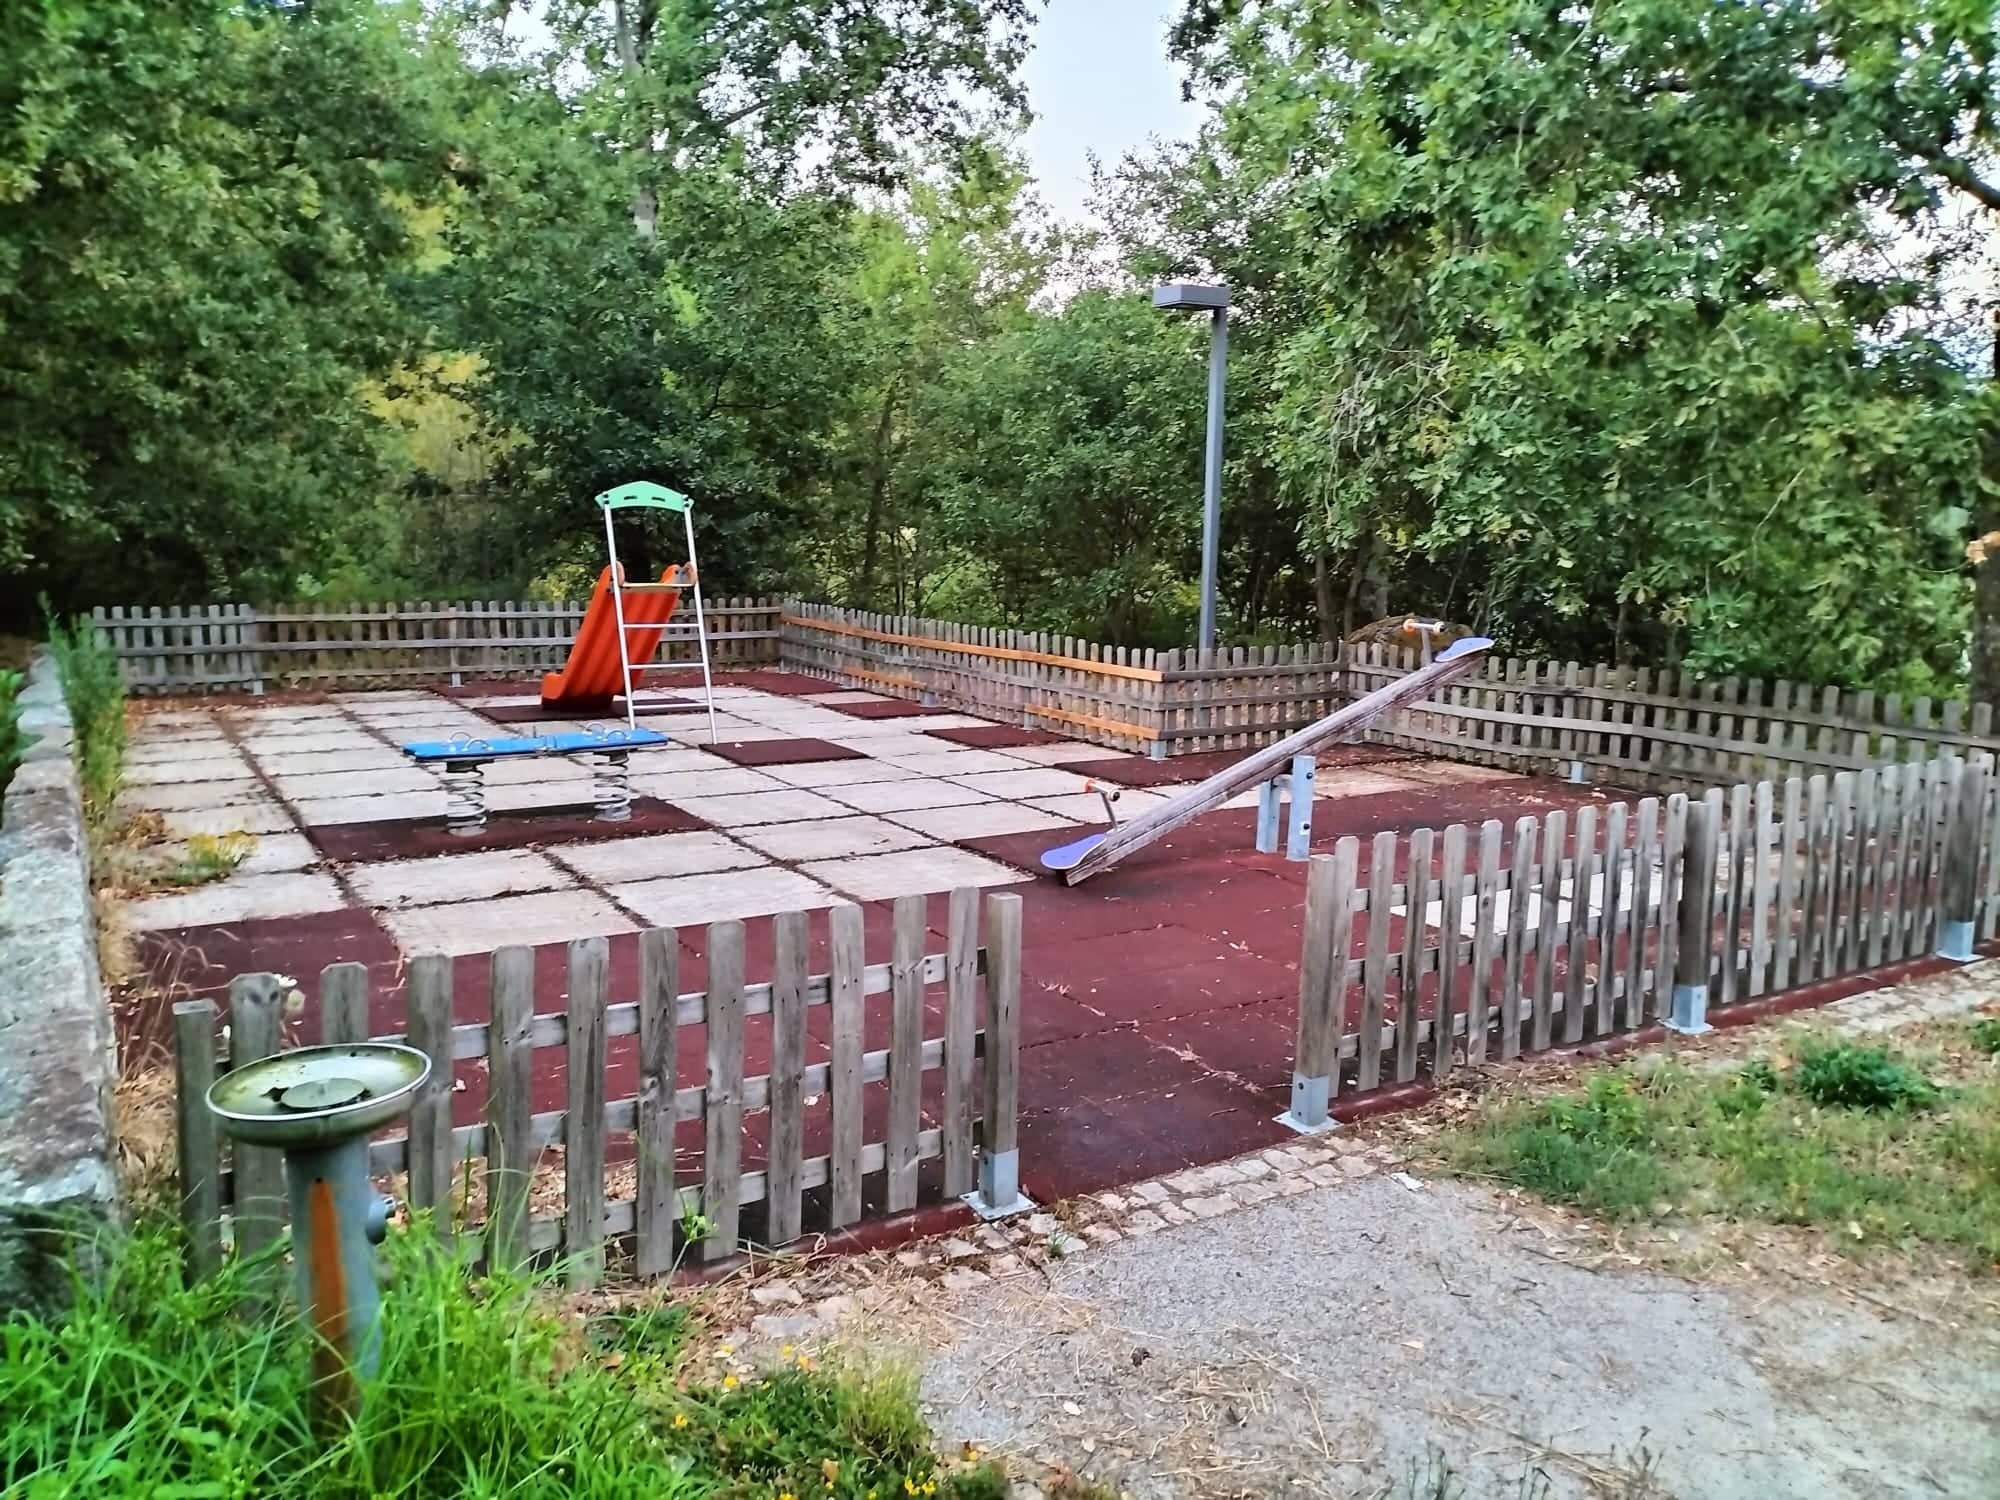 Parque infantil vandalizadado